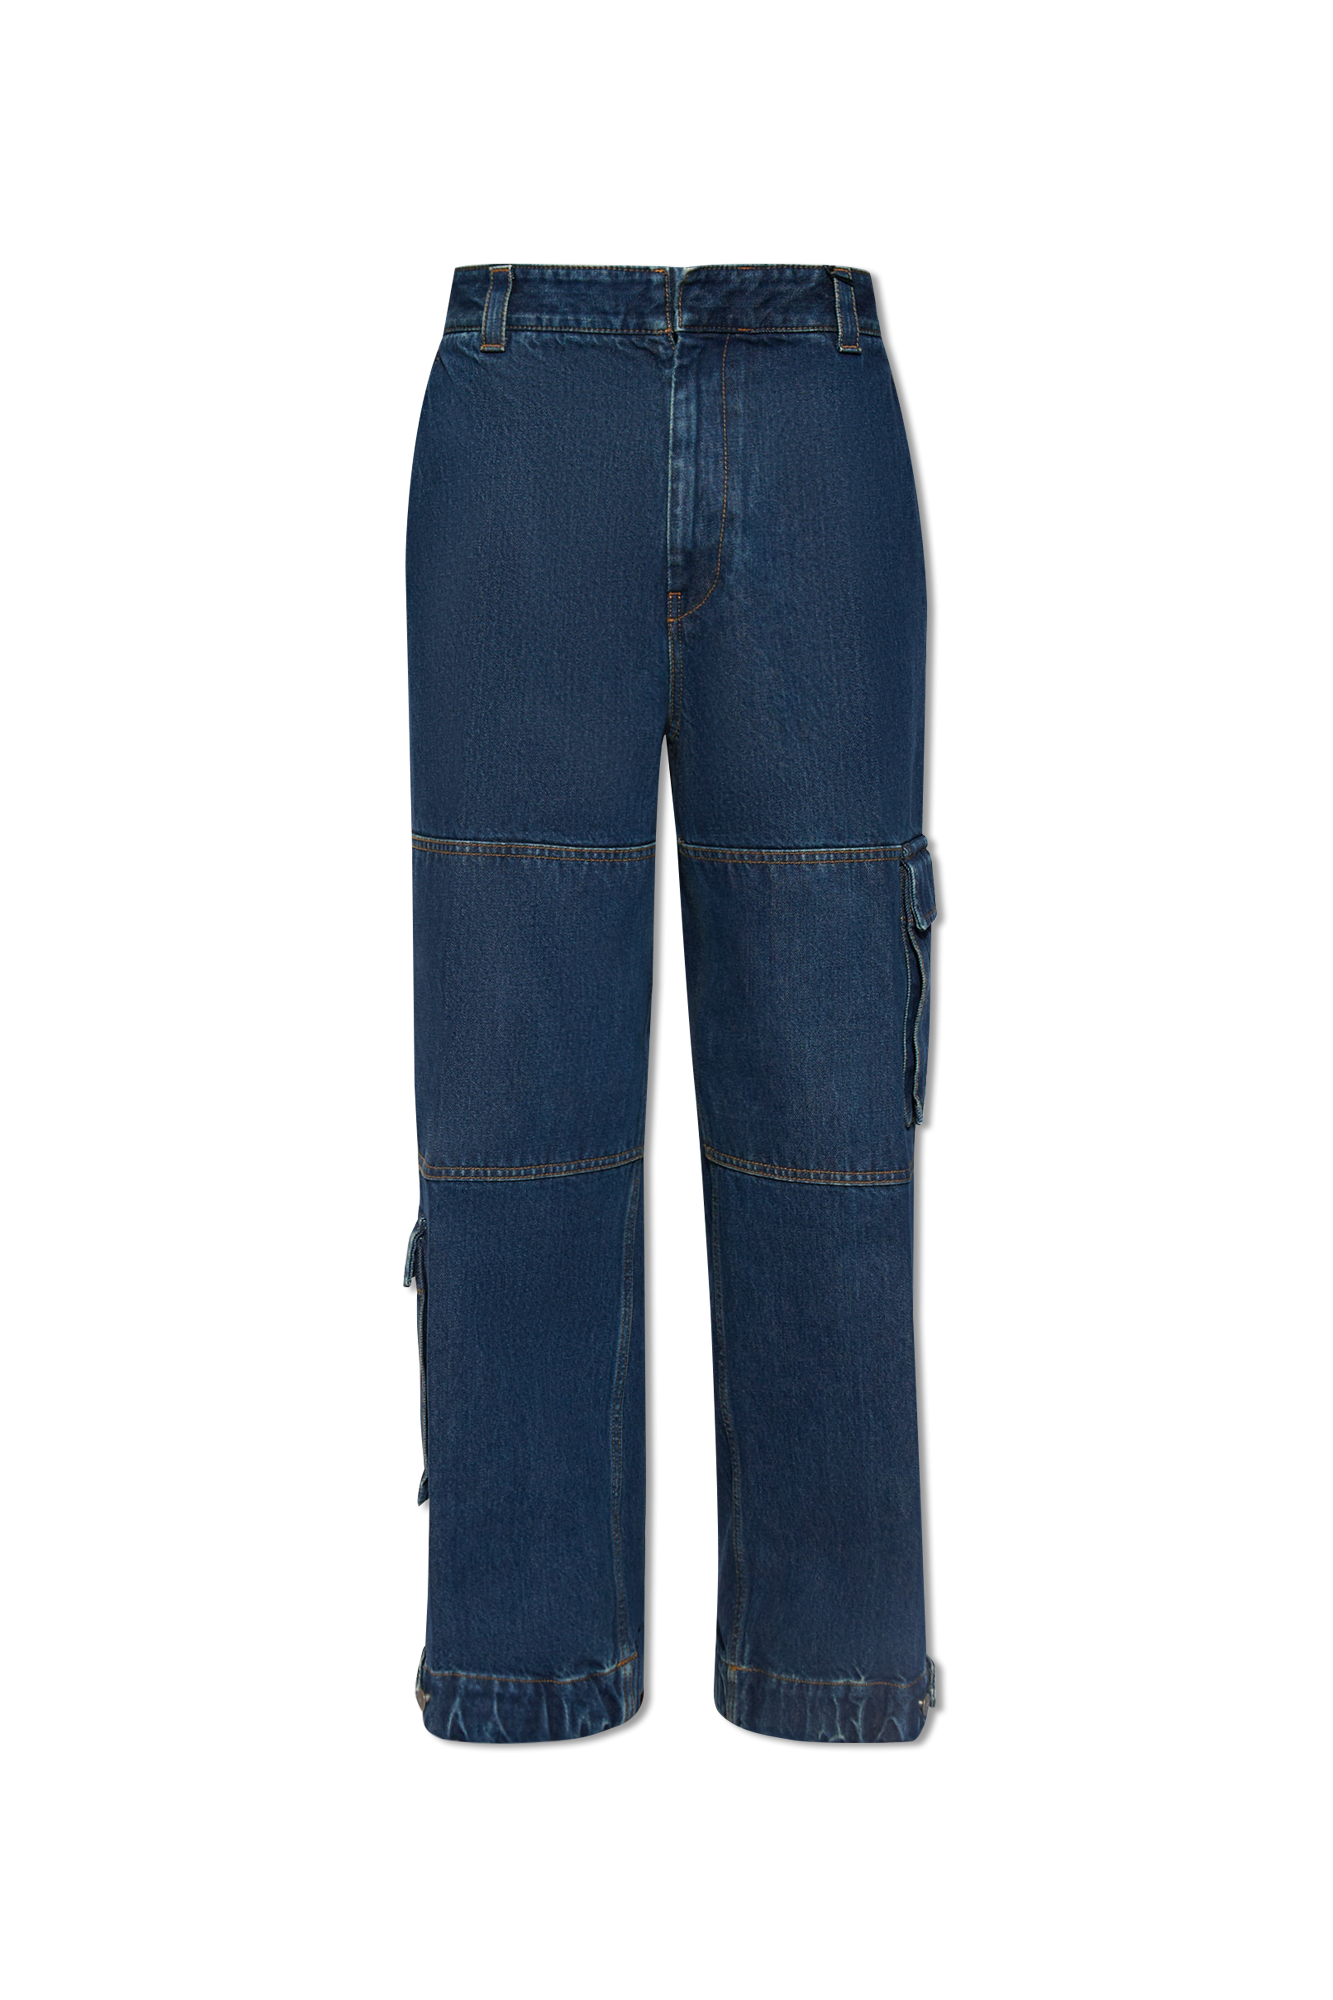 gucci 50cm Cargo jeans